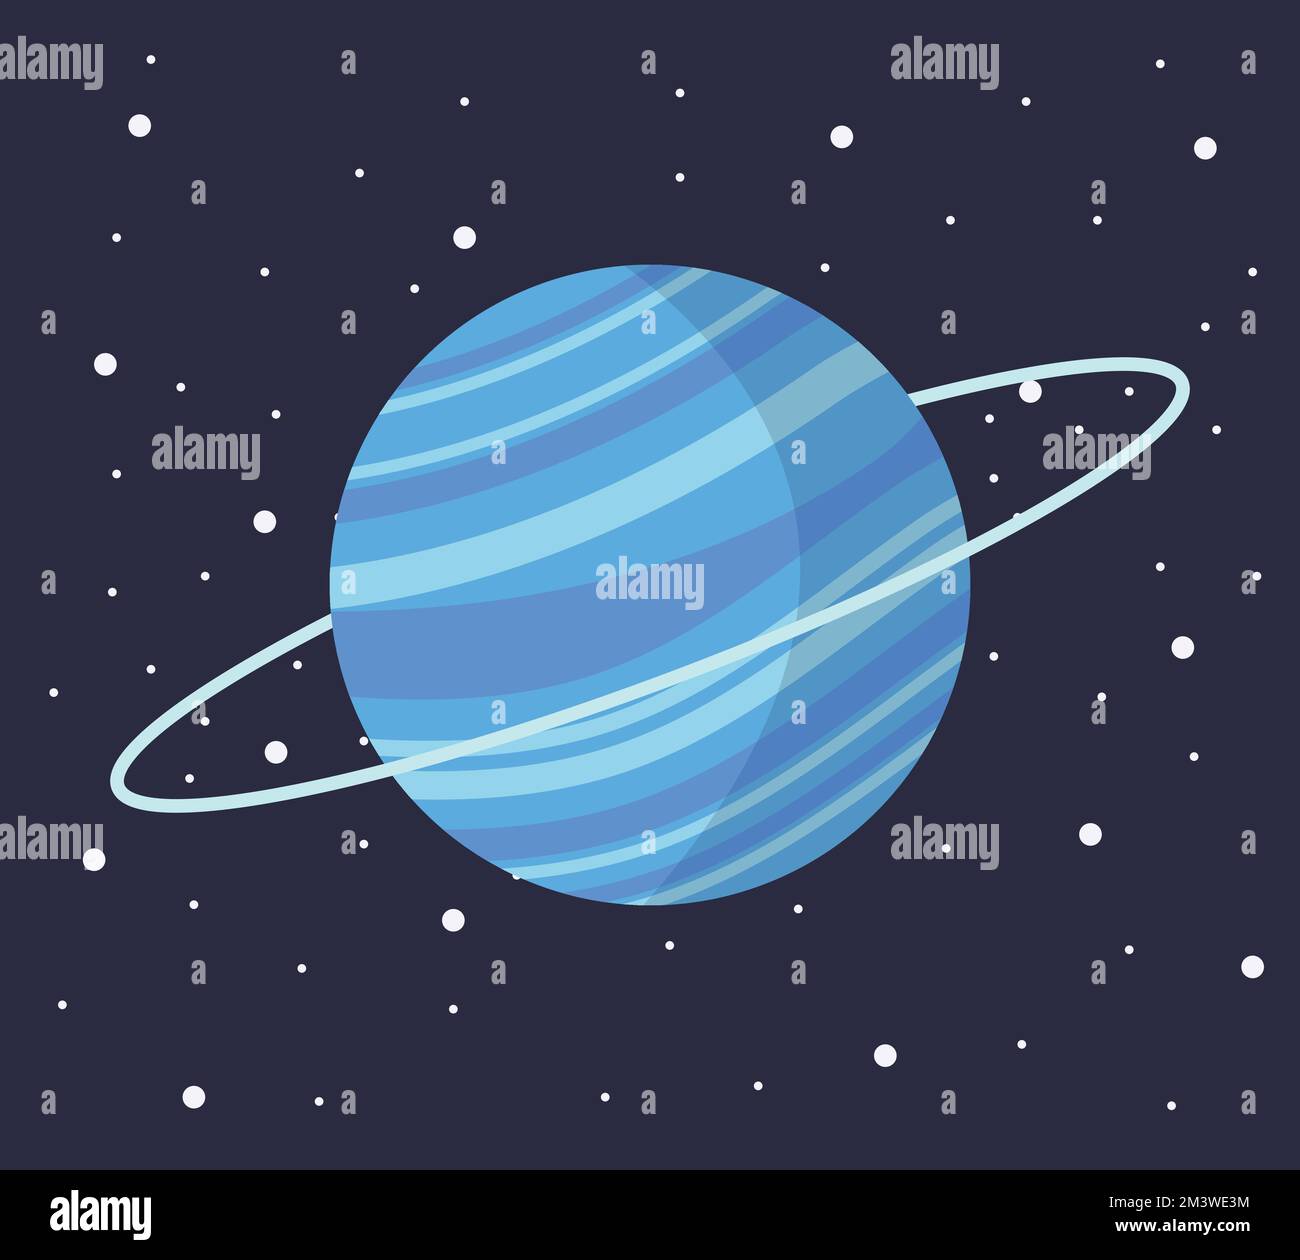 Cartoon solar system planet in flat style. Uranus planet on dark space with stars vector illustration. Stock Vector